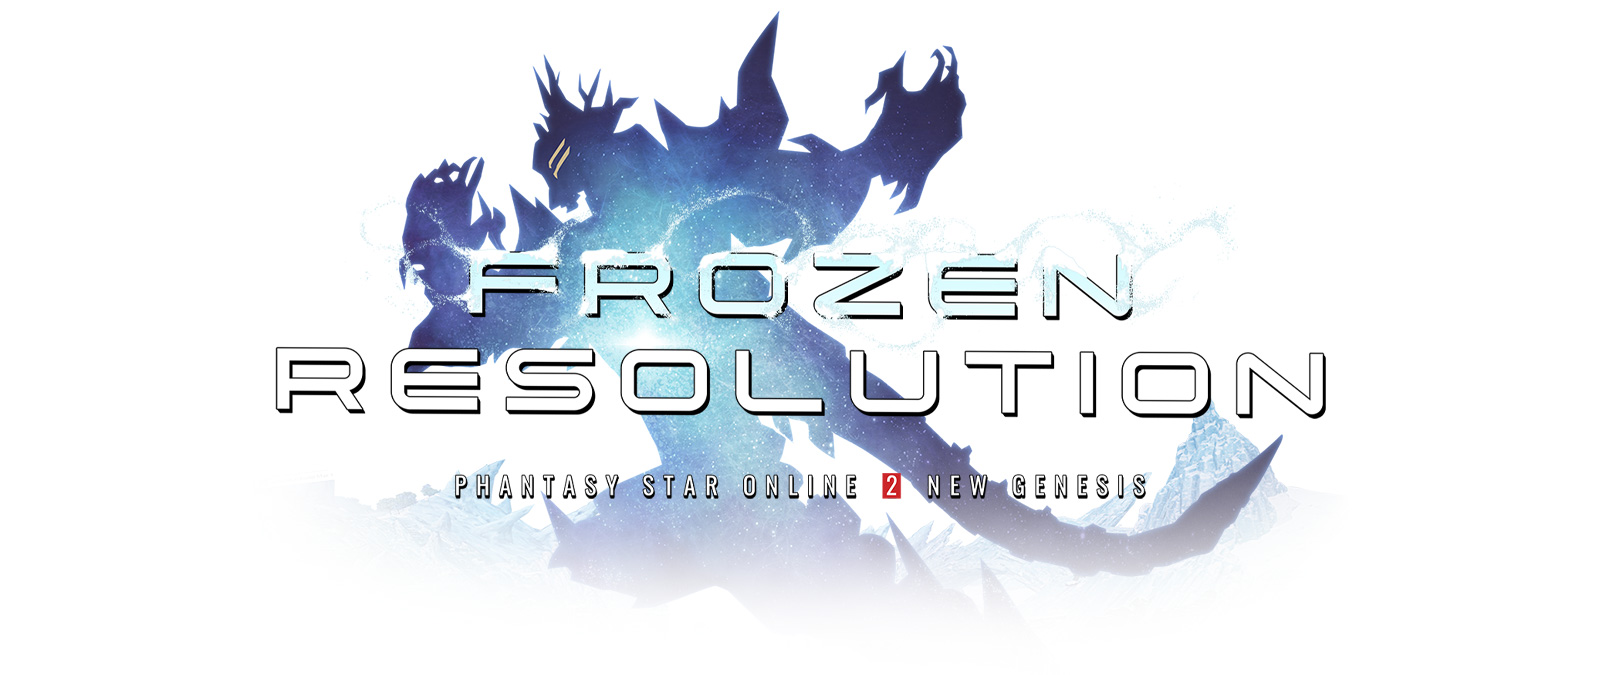 Frozen Resolution、Phantasy Star Online 2 New Genesis、盔甲的輪廓被霜覆蓋。